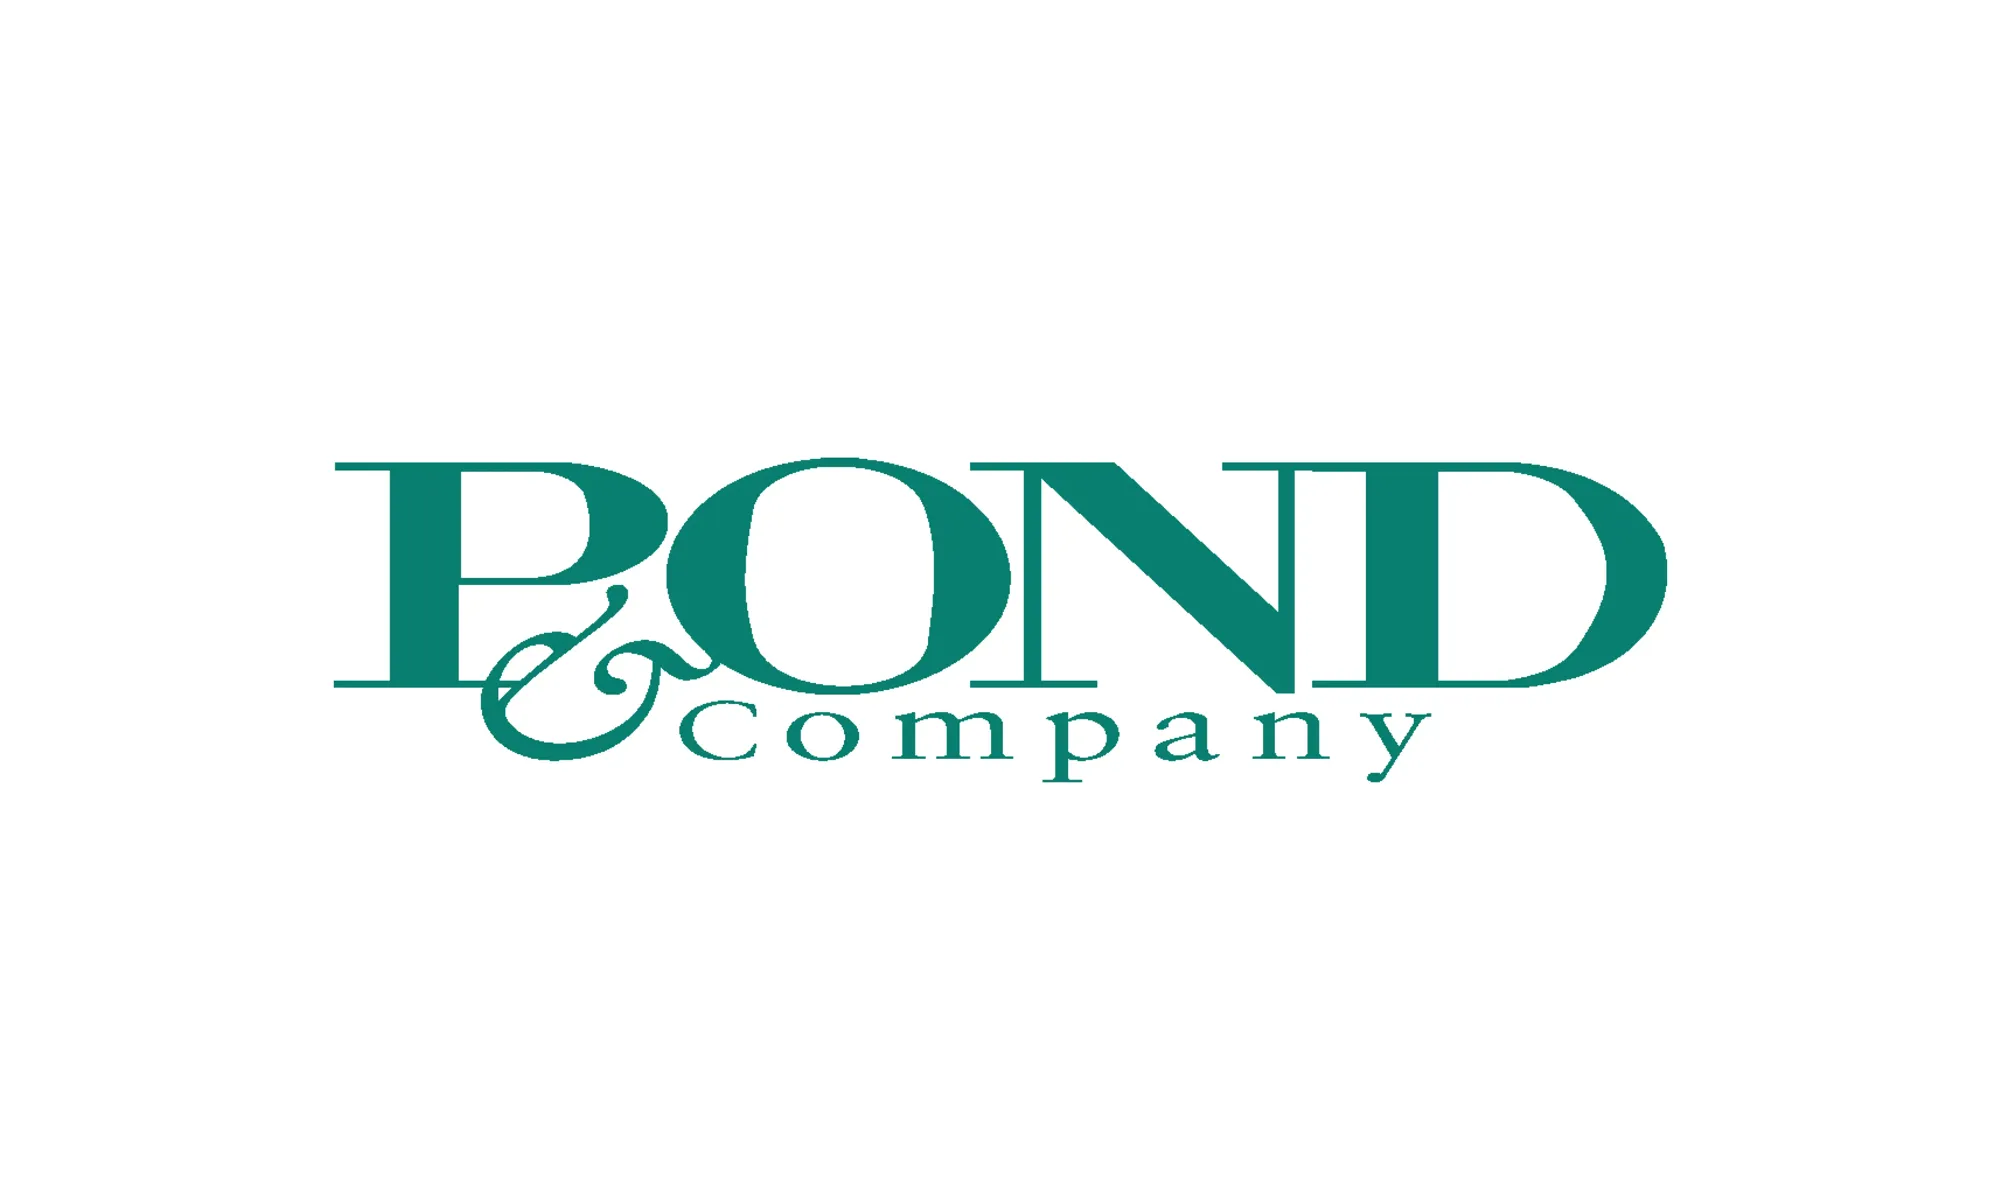 pond & company logo 1998